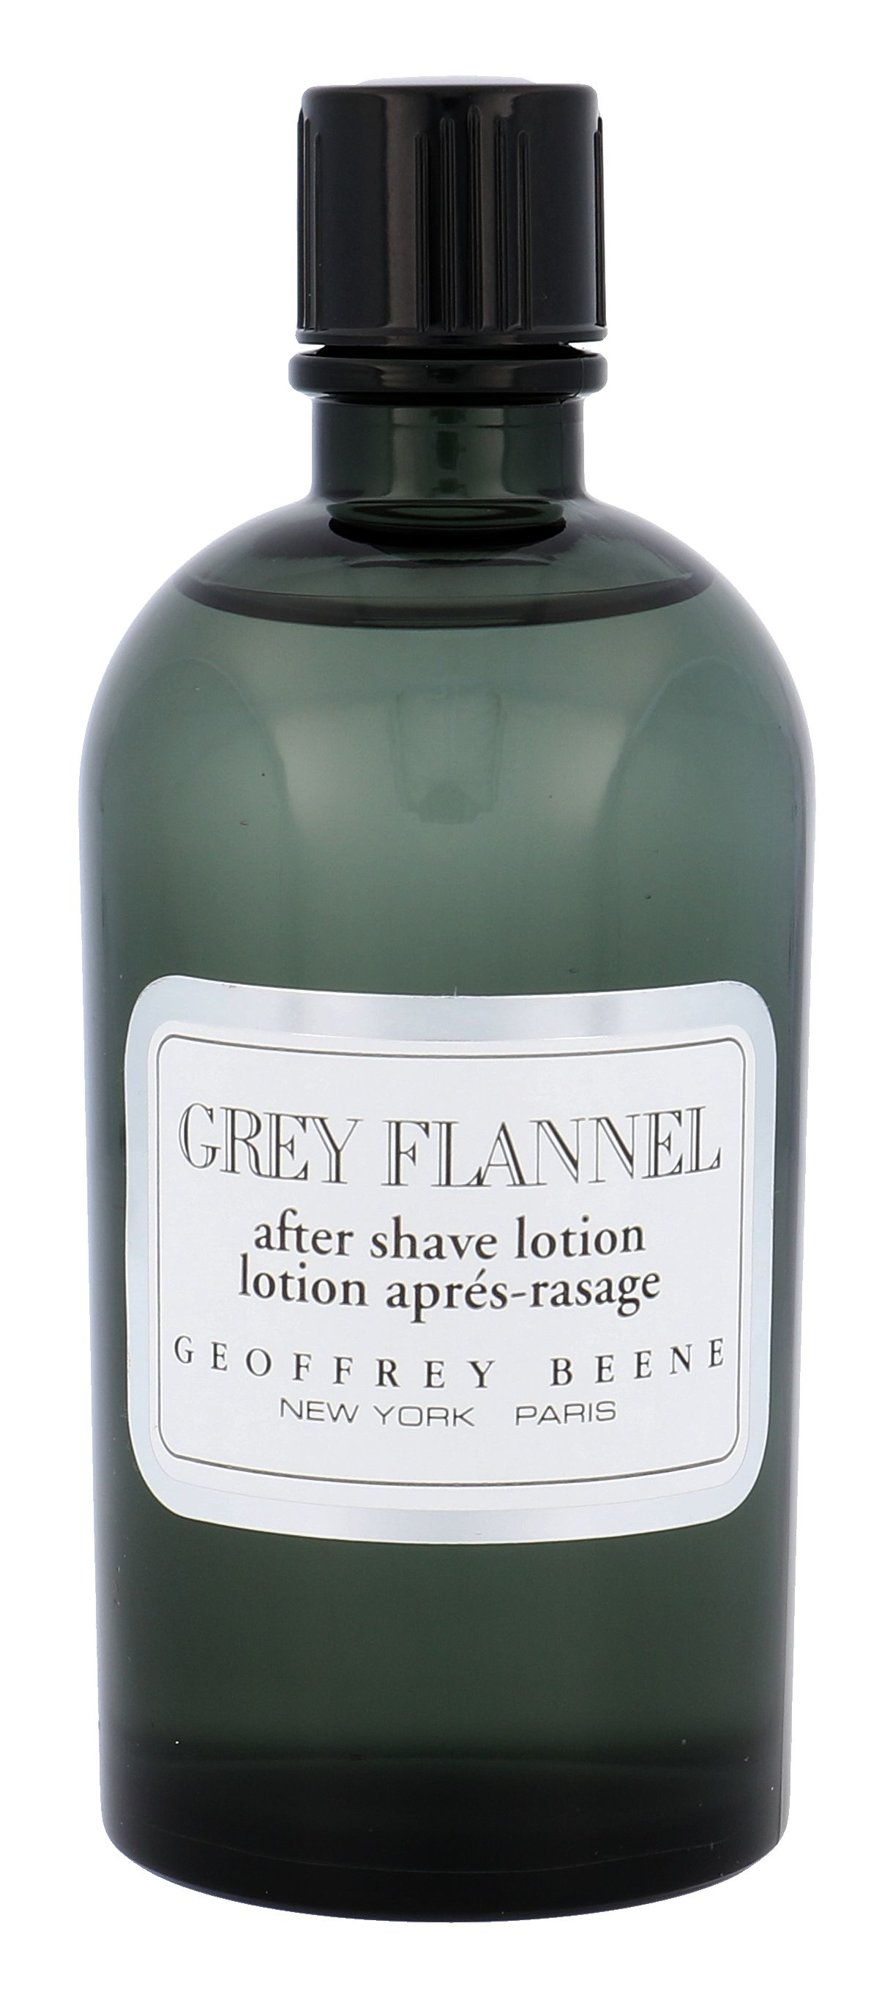 Geoffrey Beene Grey Flannel 120ml vanduo po skutimosi